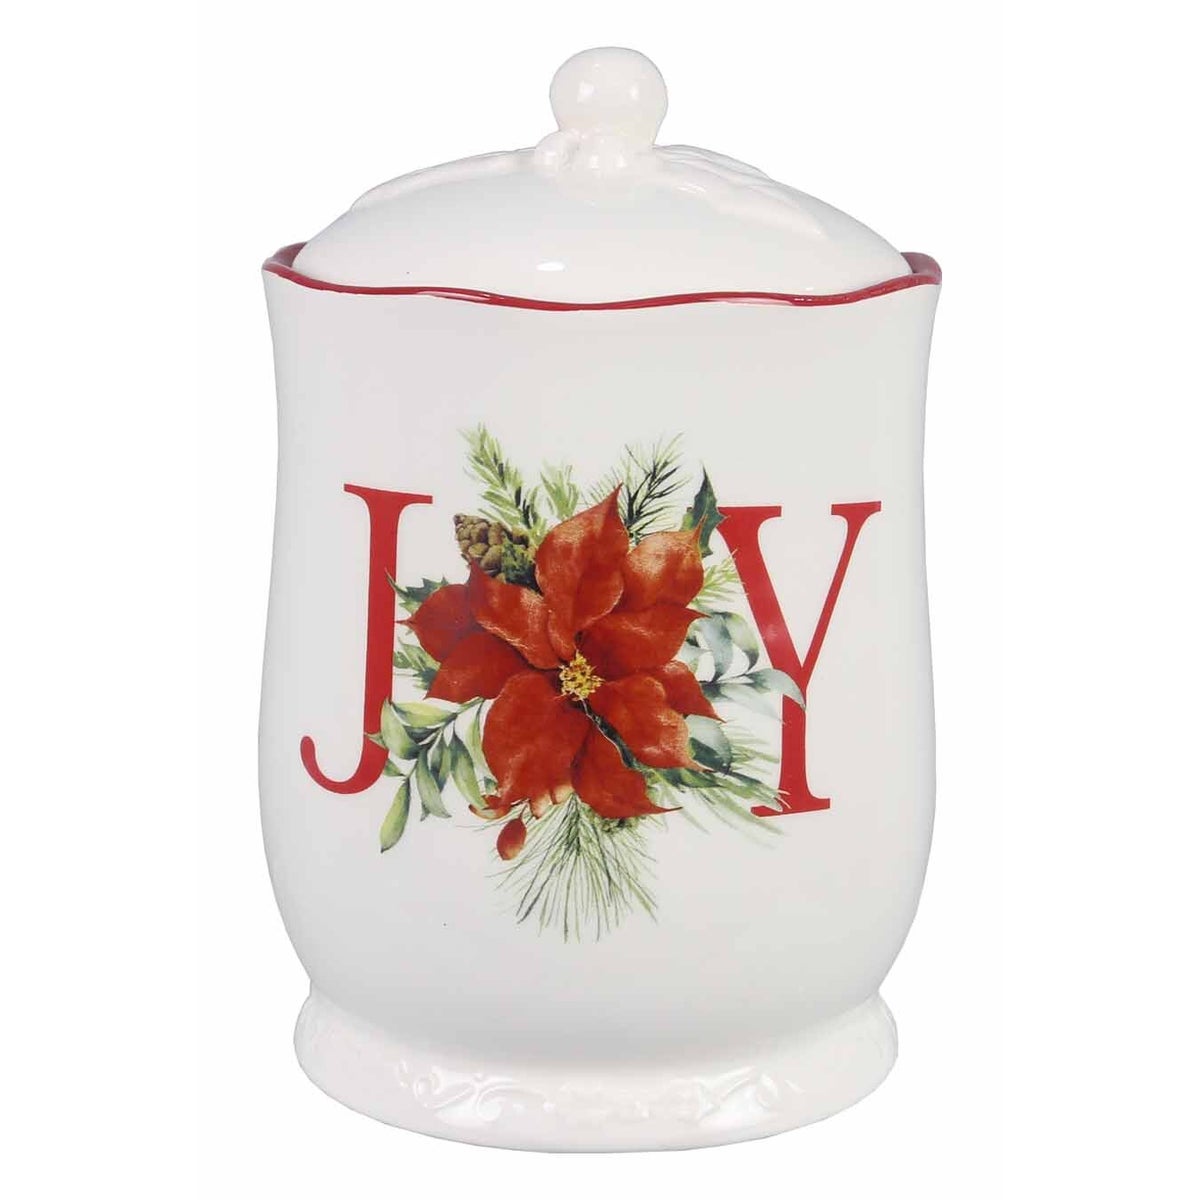 Ceramic Christmas Joy Treat Jar With Silicon Seal